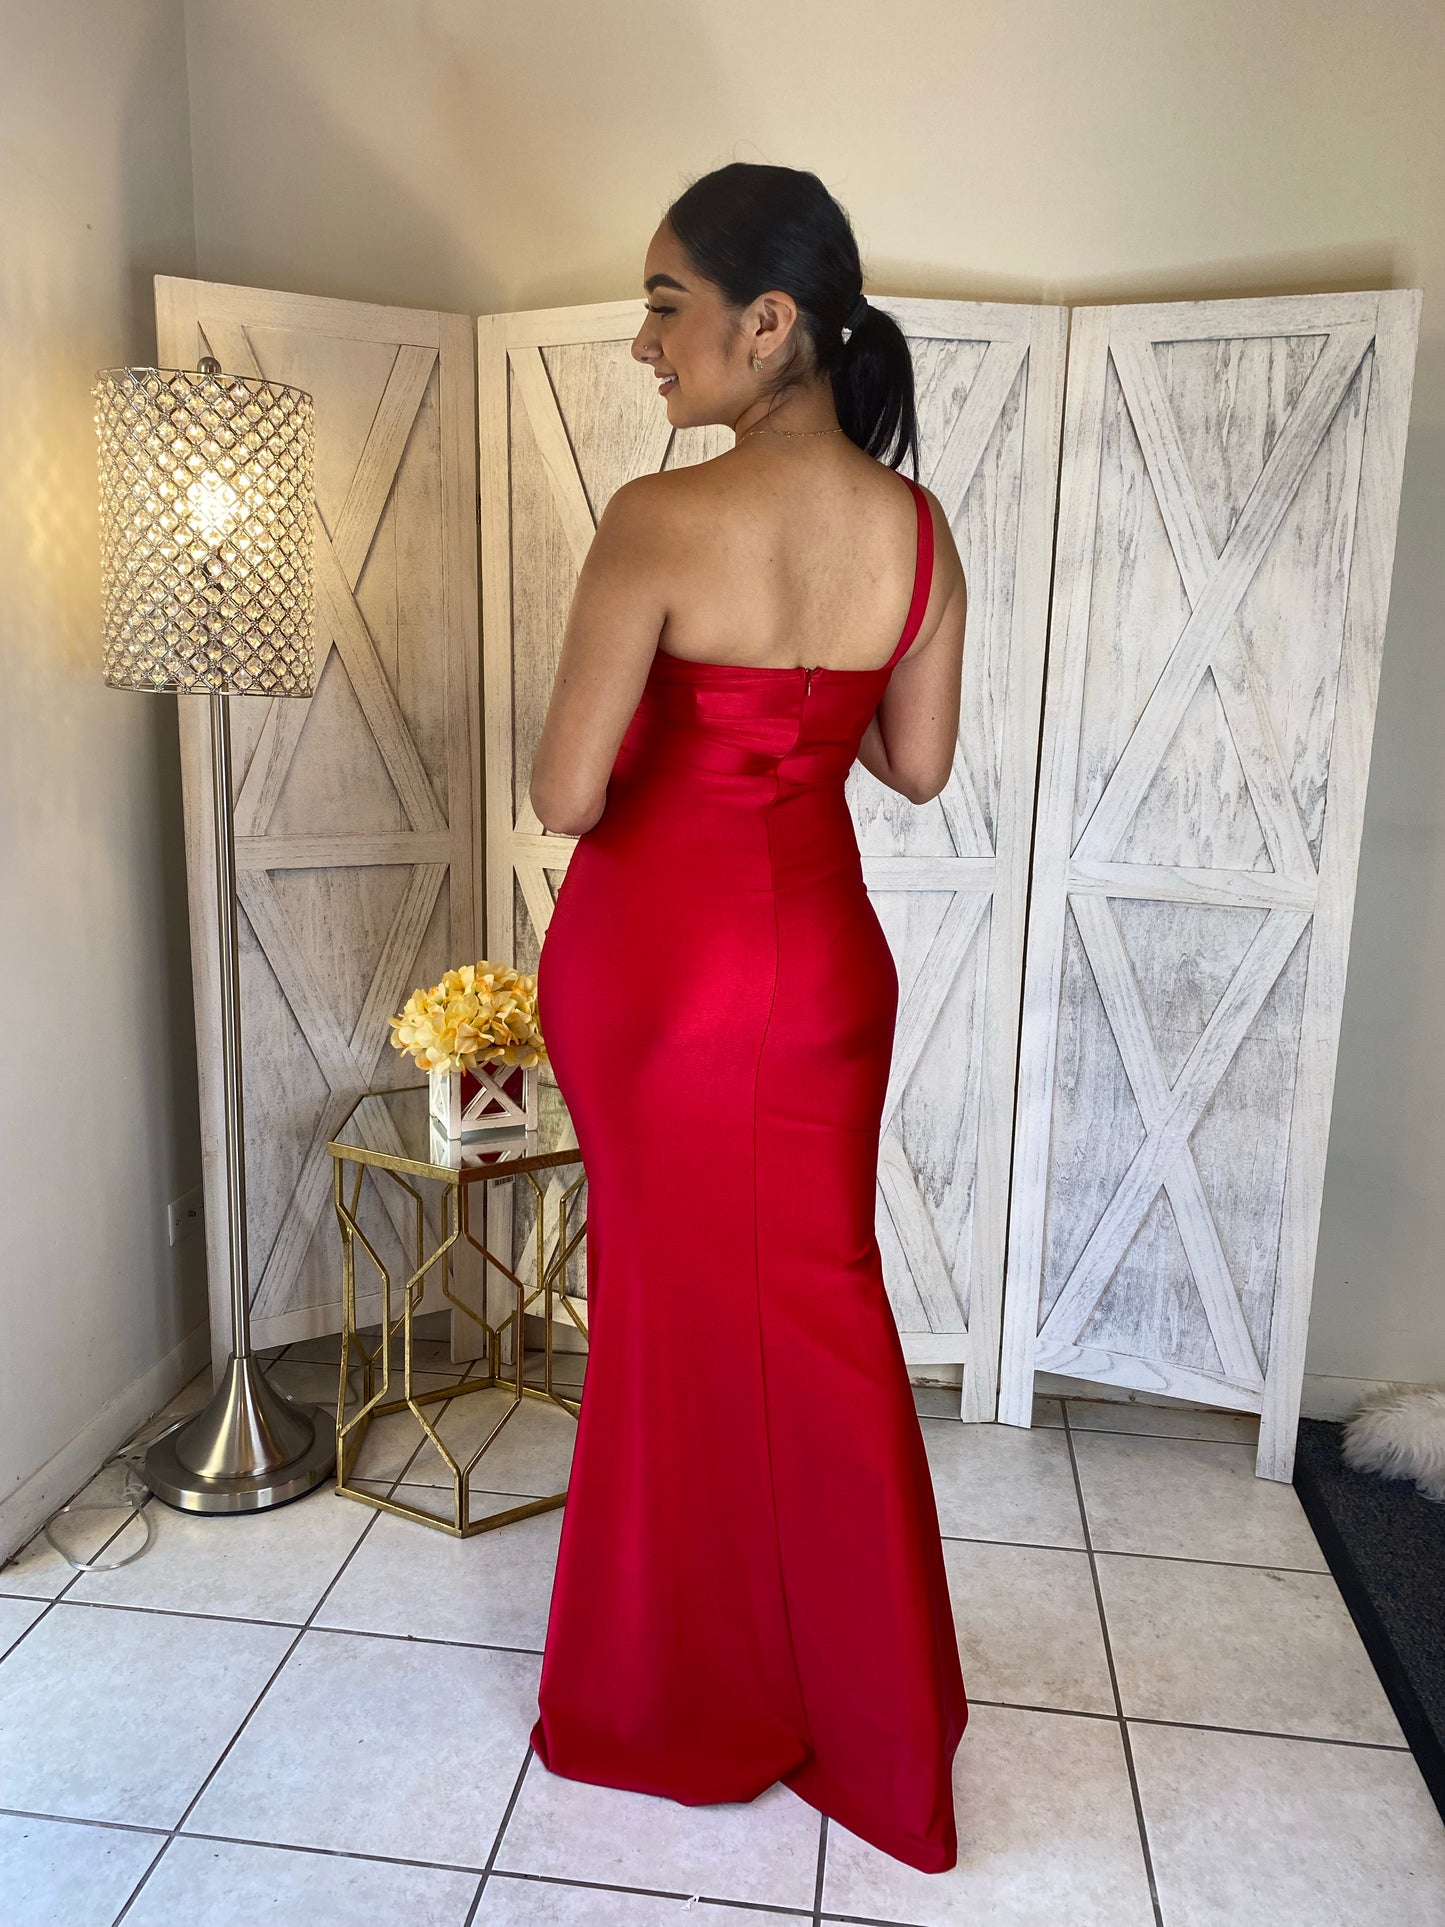 Keeping It Classy Dress (Red)